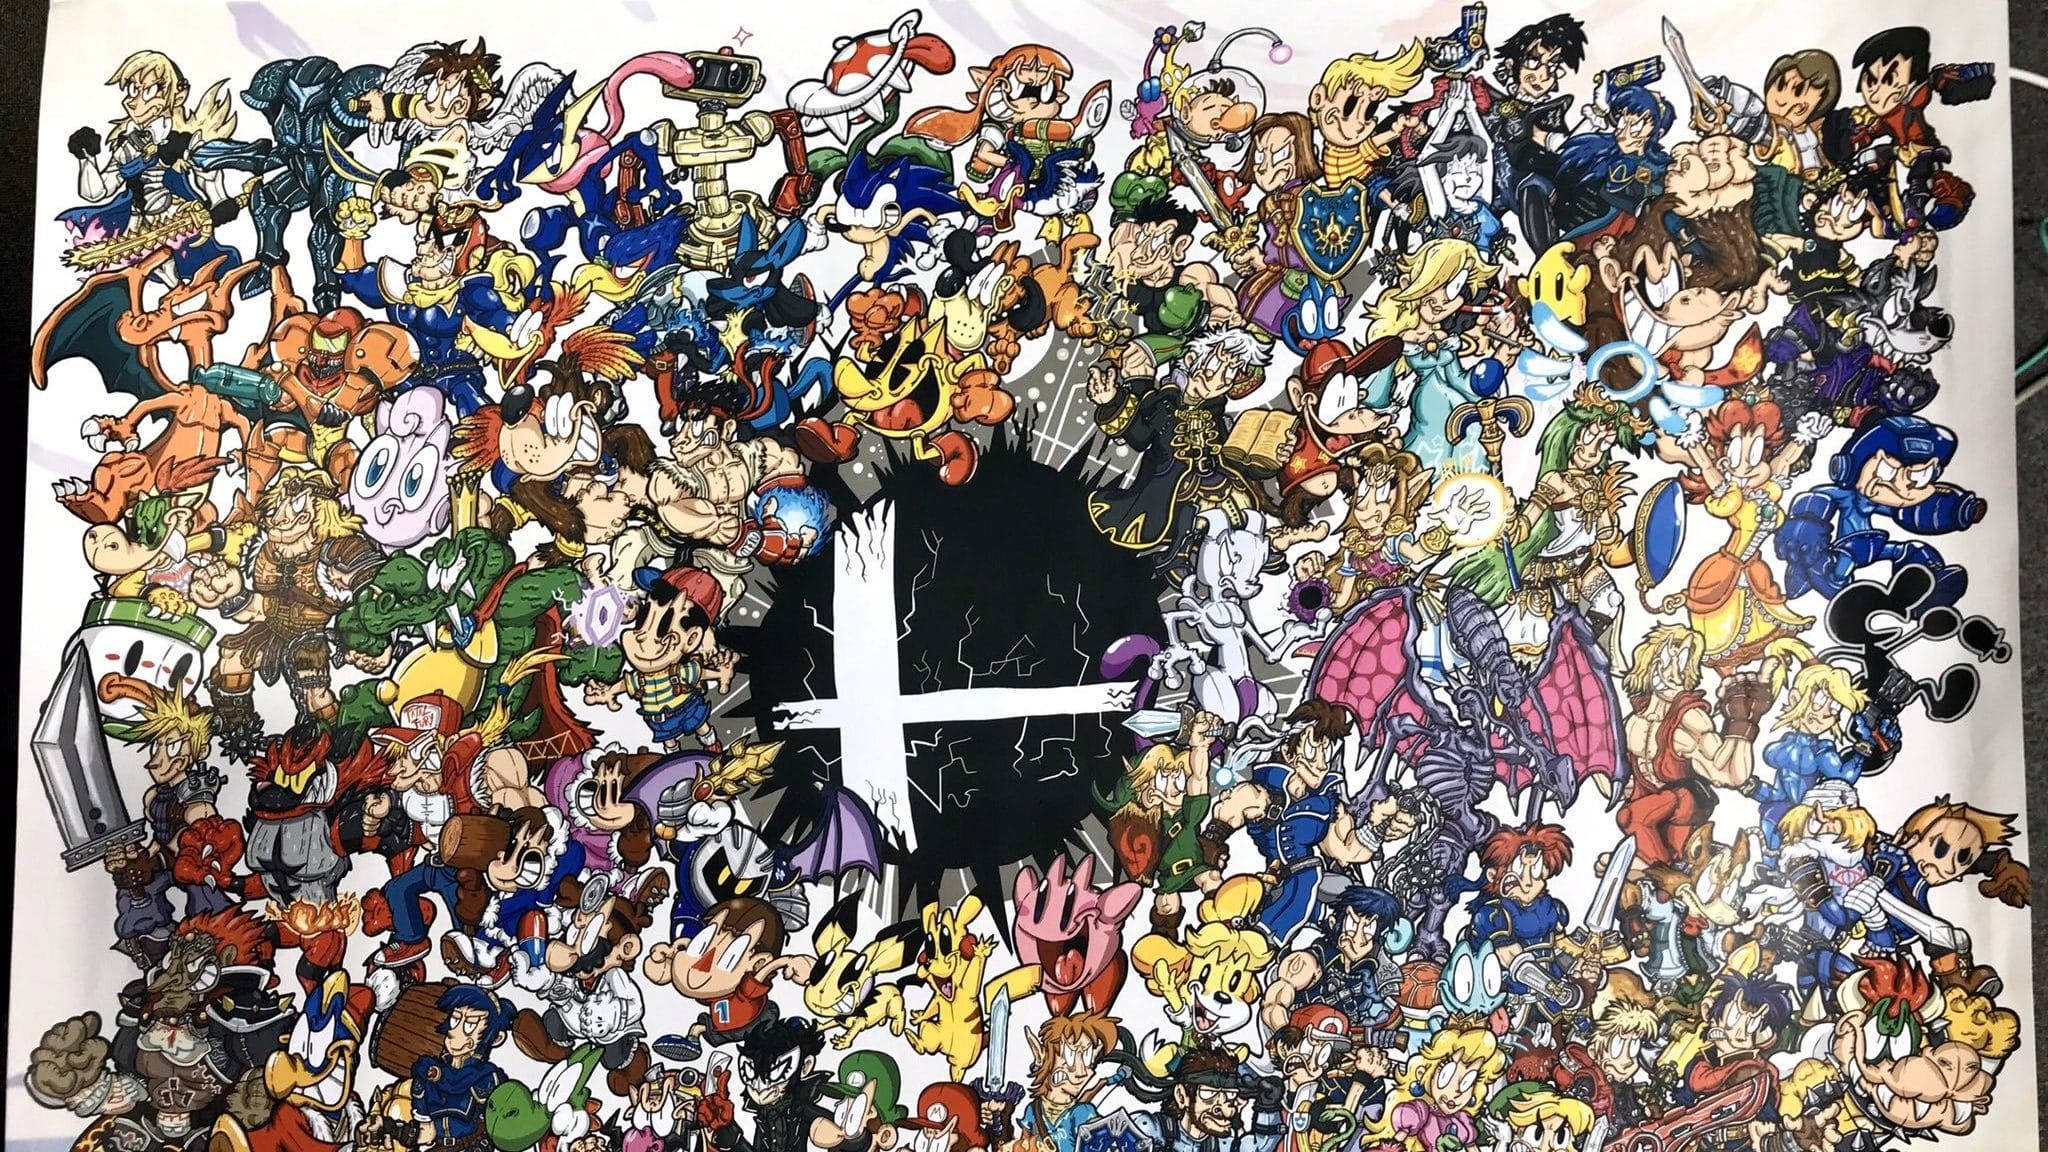 Echad un vistazo a este póster fan-made de Super Smash Bros. Ultimate enviado a Sora Ltd